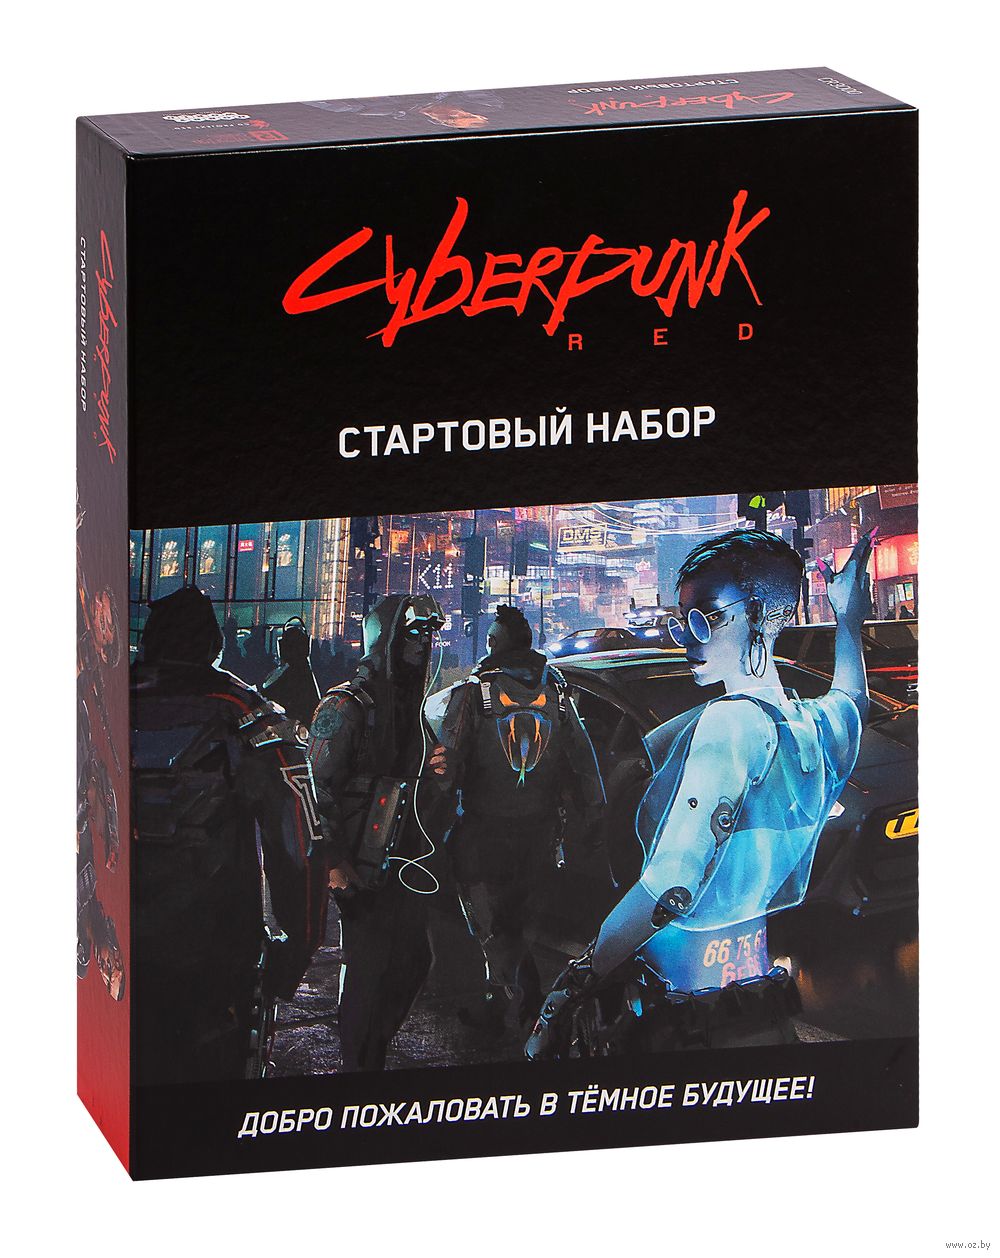 Cyberpunk red стартовый набор pdf фото 12